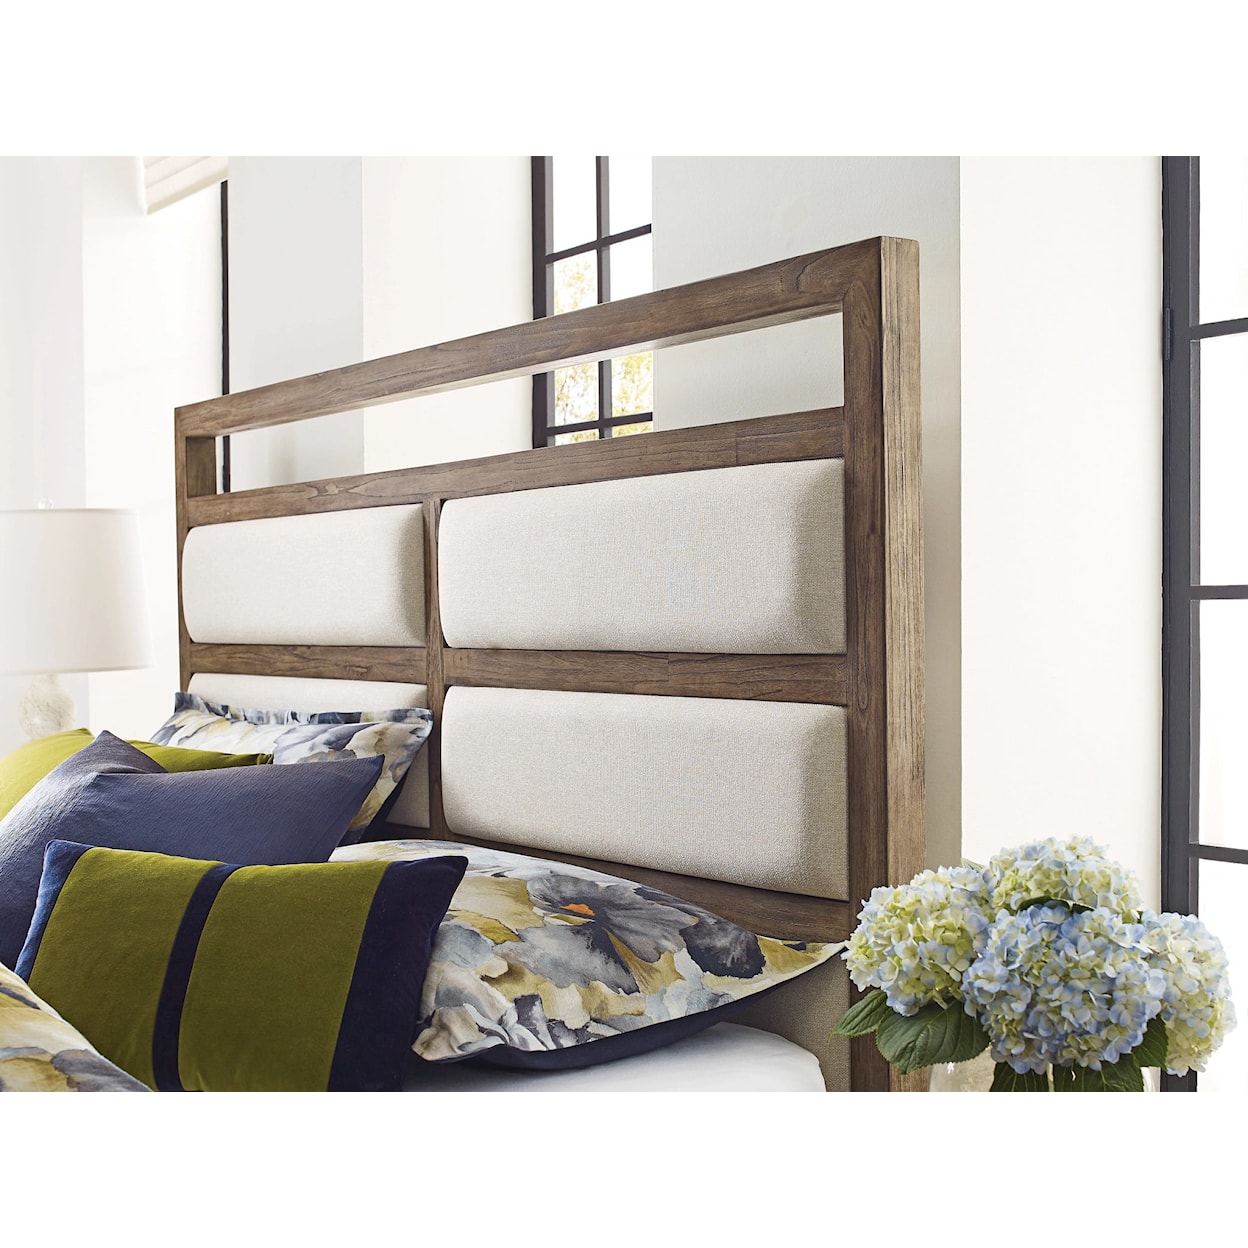 Kincaid Furniture Debut Wyatt King Upholstered Bed